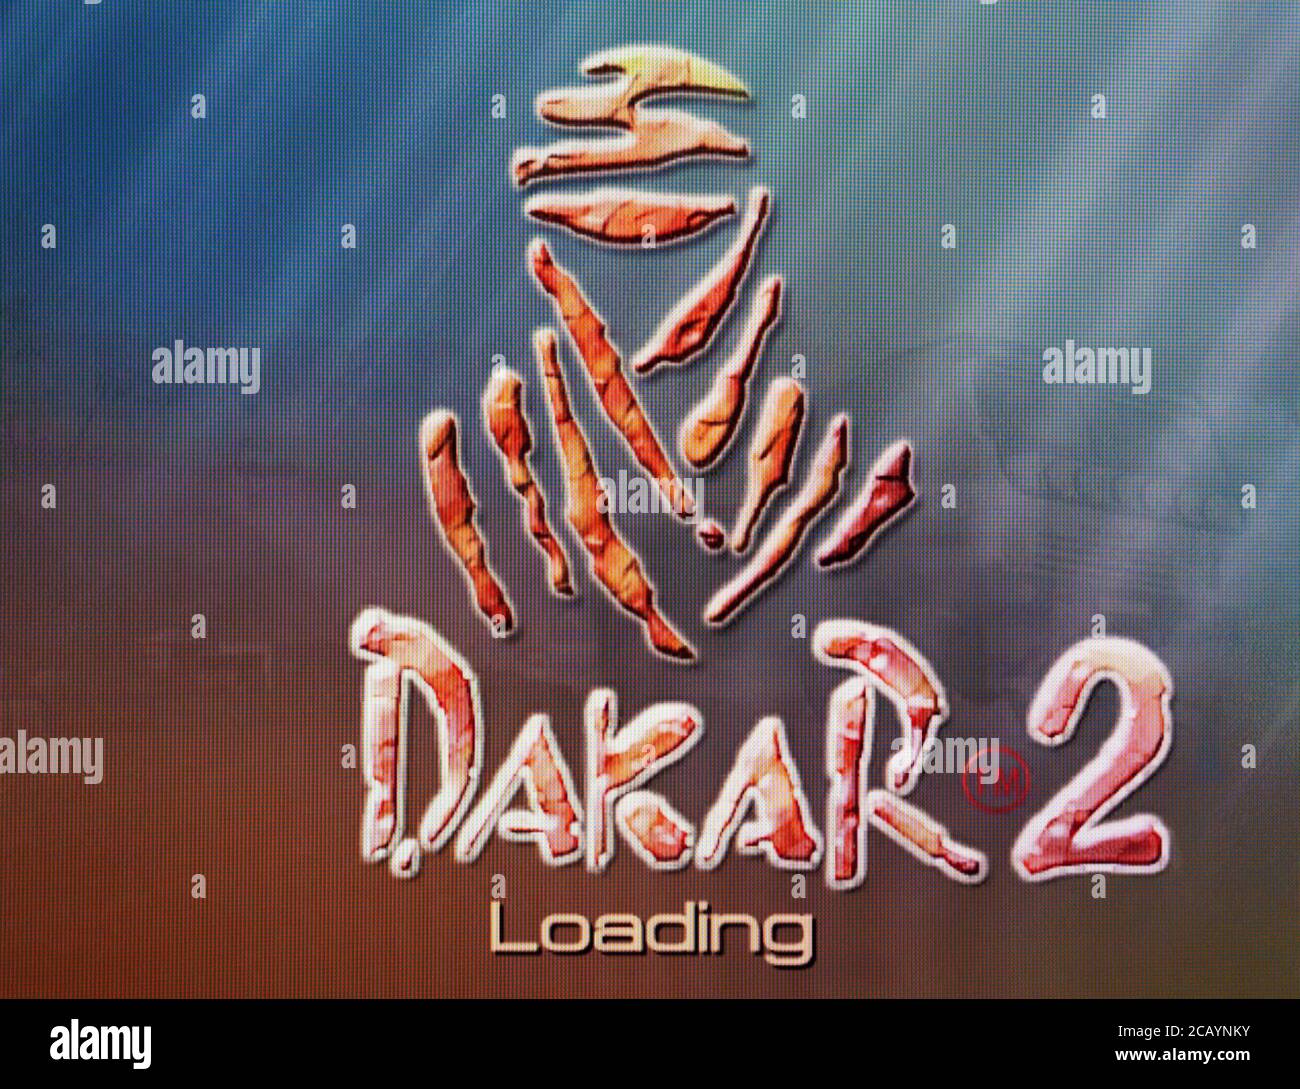 Dakar 2 - Nintendo Gamecube Videogame - Editorial use only Stock Photo